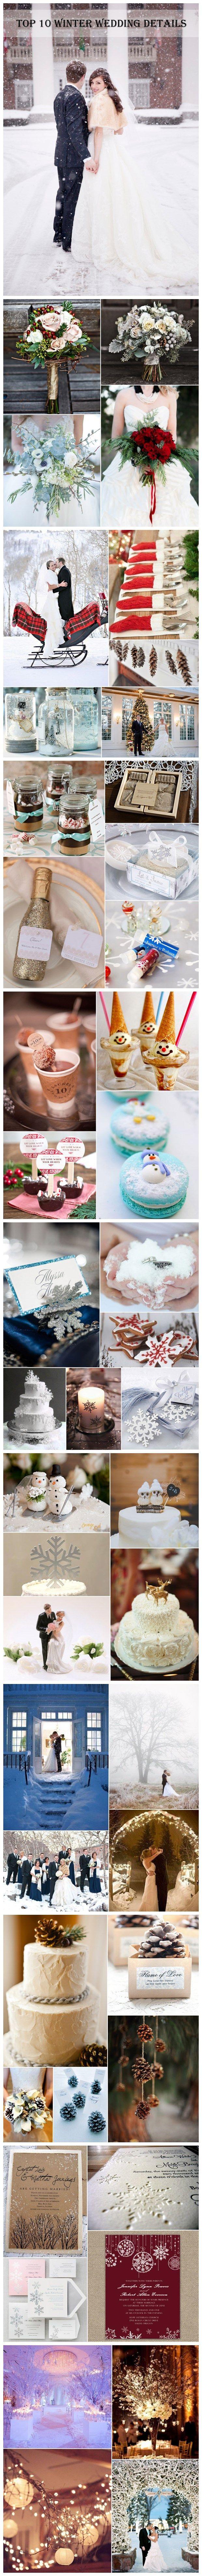 Свадьба - Top 10 Winter Wedding Ideas & Quirky Details 2014